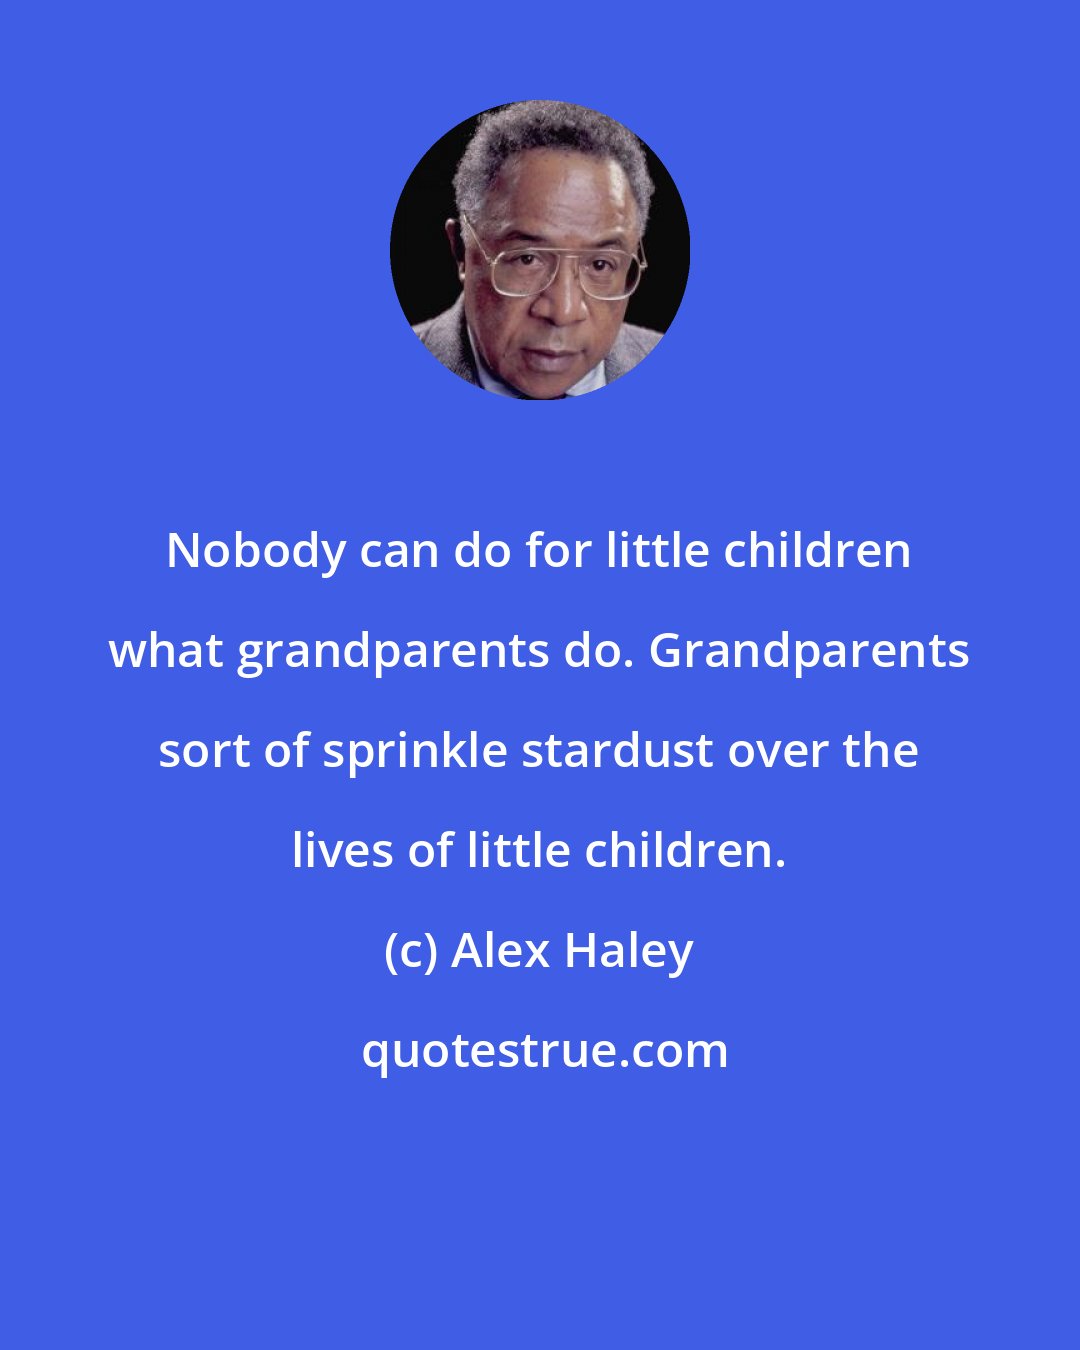 Alex Haley: Nobody can do for little children what grandparents do. Grandparents sort of sprinkle stardust over the lives of little children.